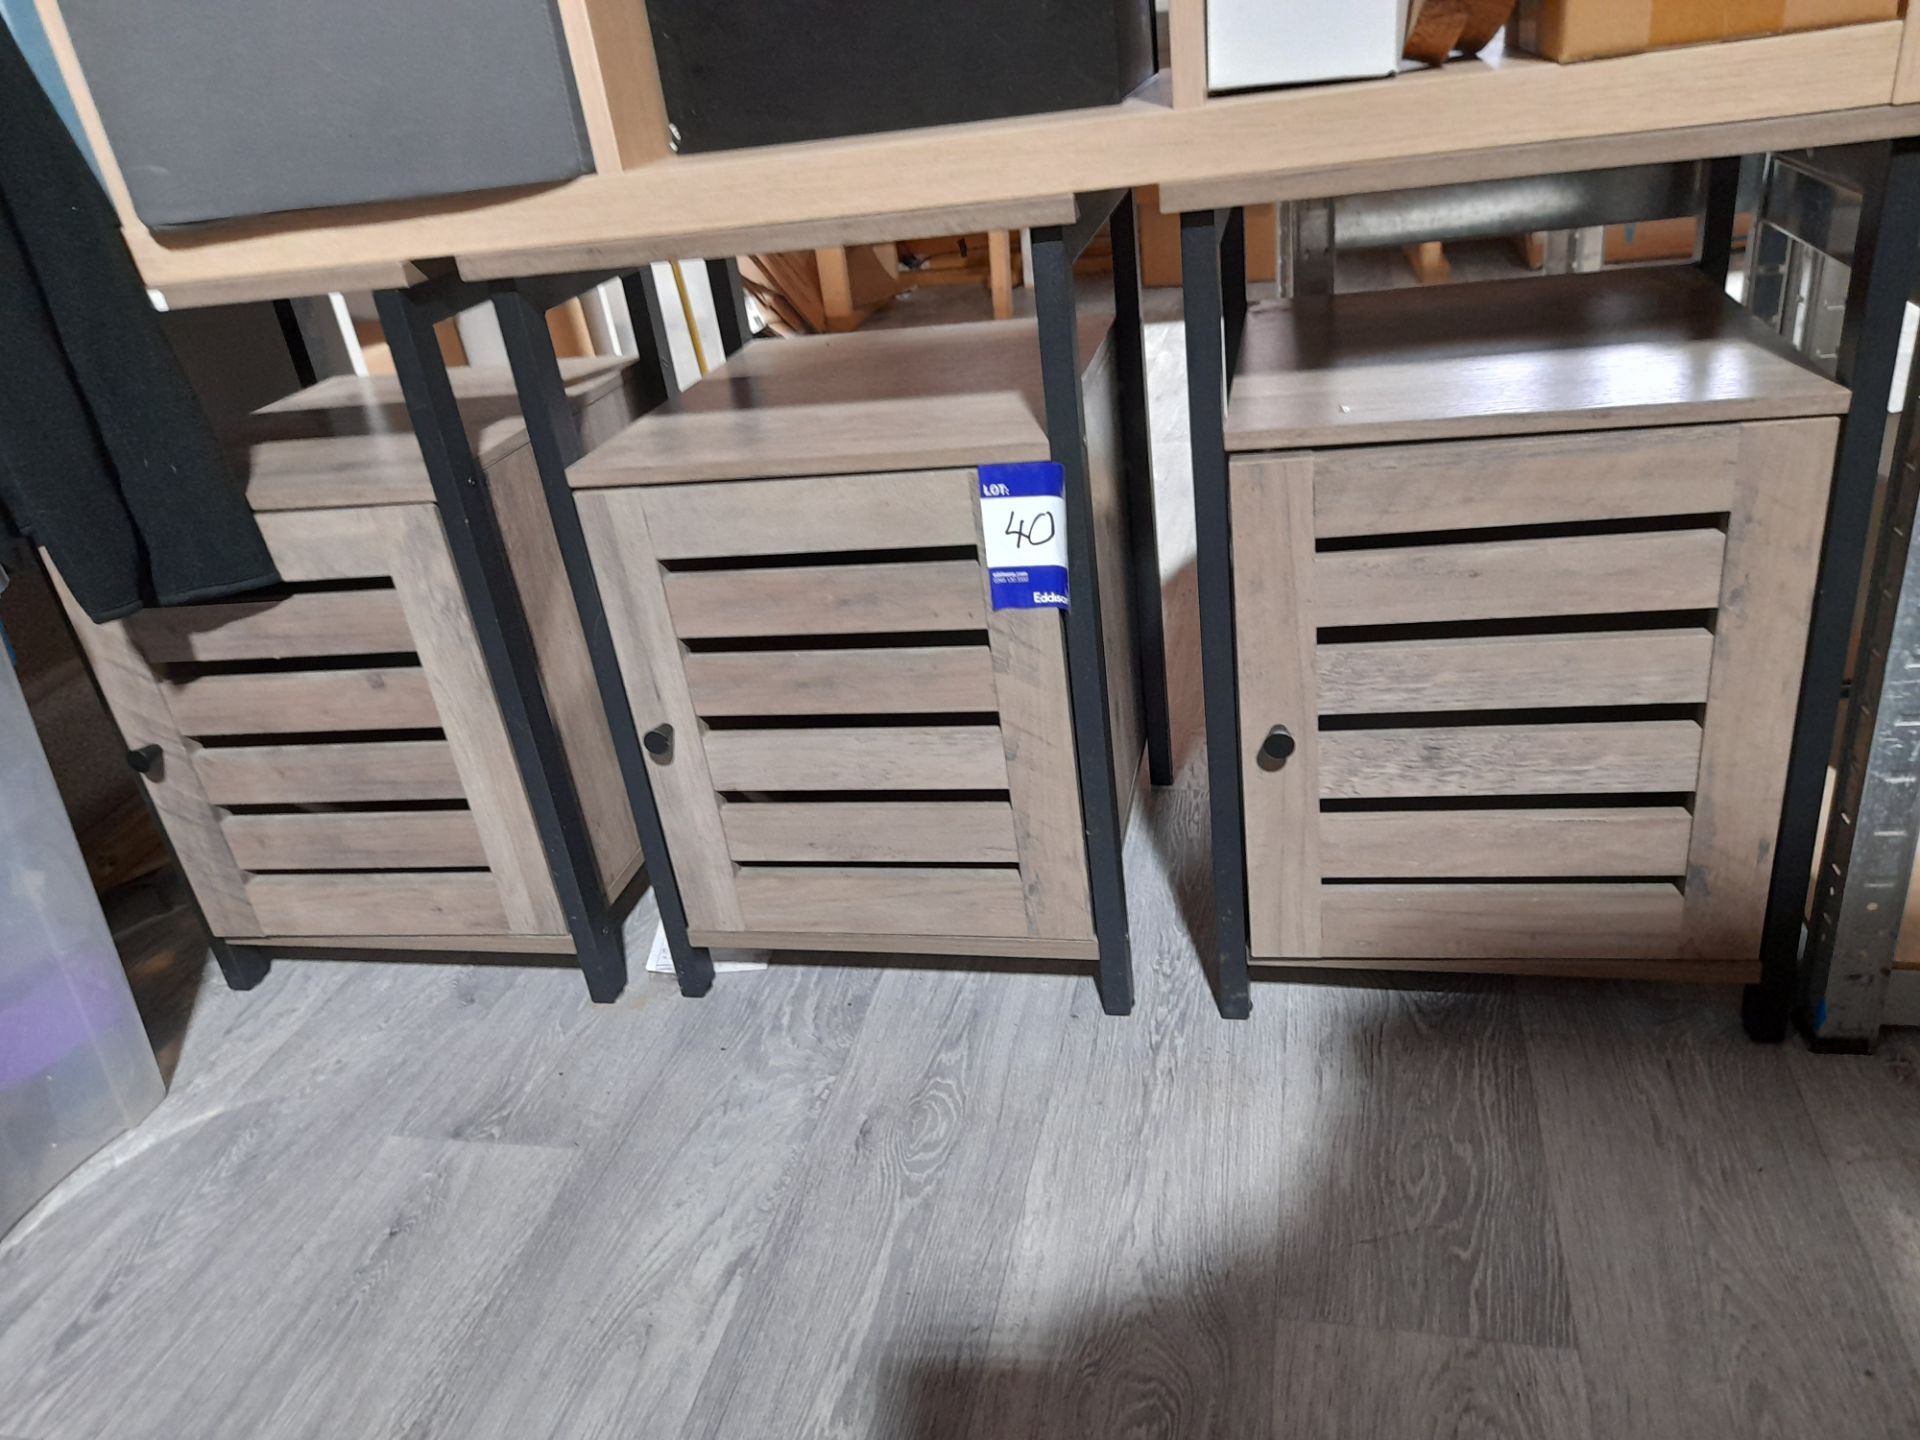 4 x drawer units - Image 2 of 2